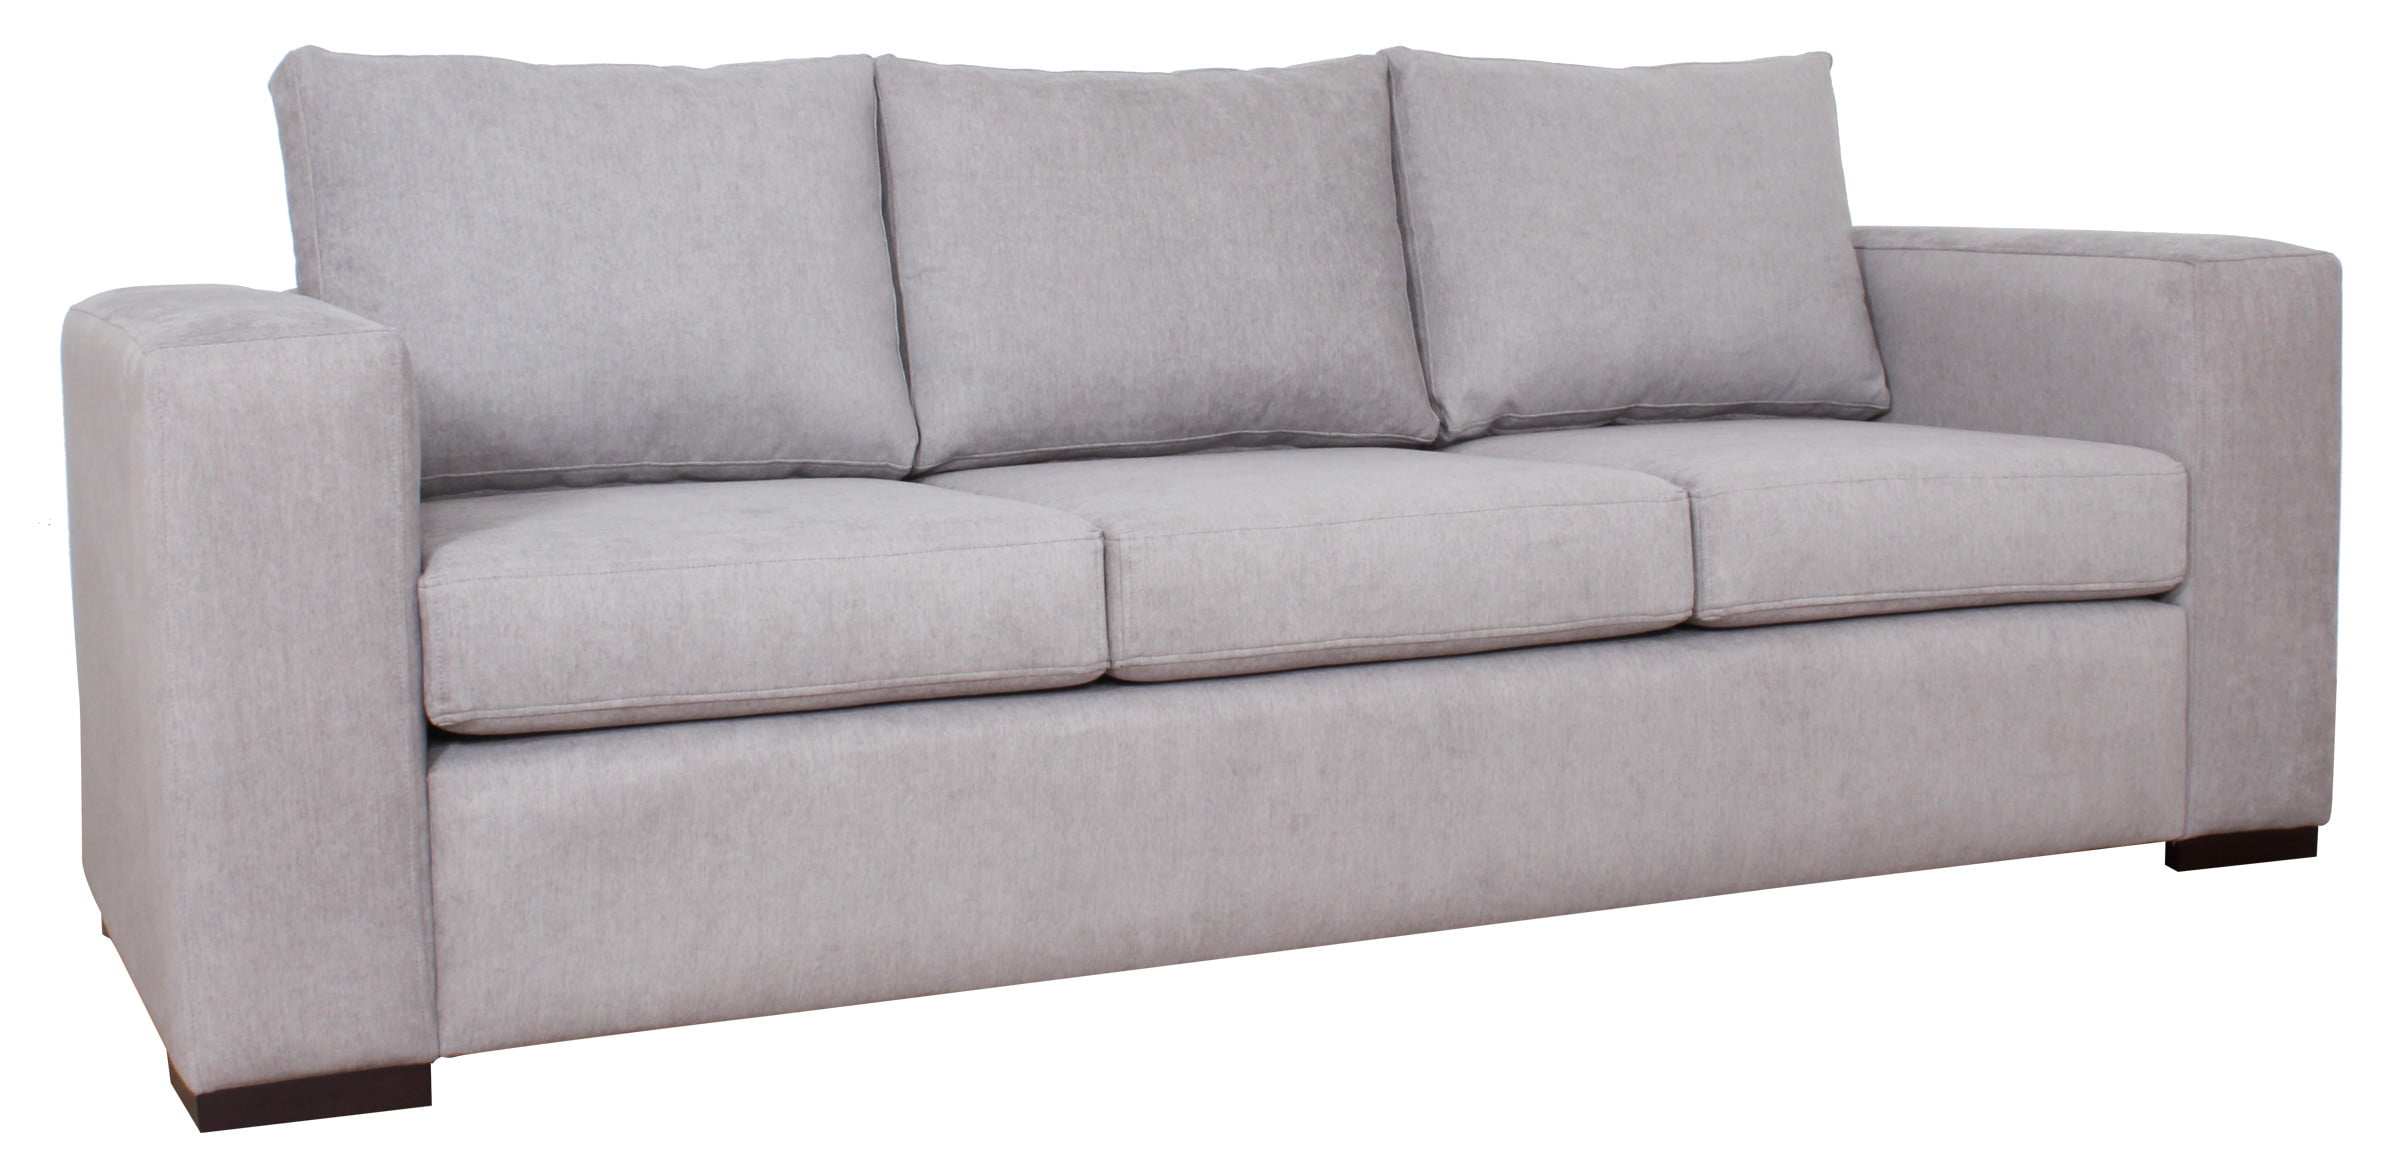 Sofa 3c Personalizado22